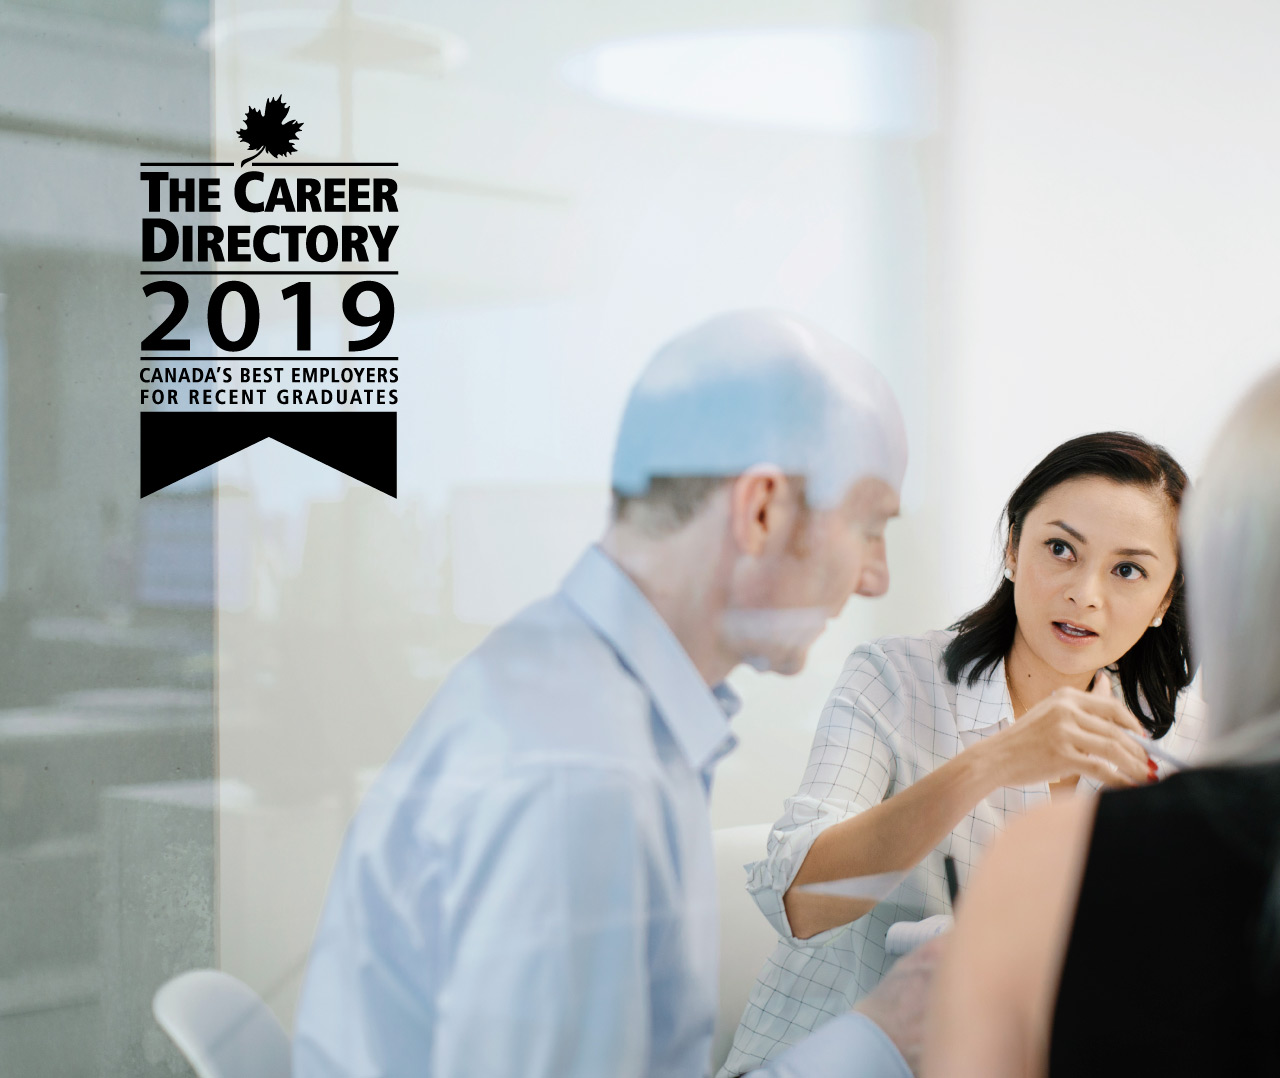 Henriquez recognized as Canada's Best Employers for Recent Graduates for 2019.